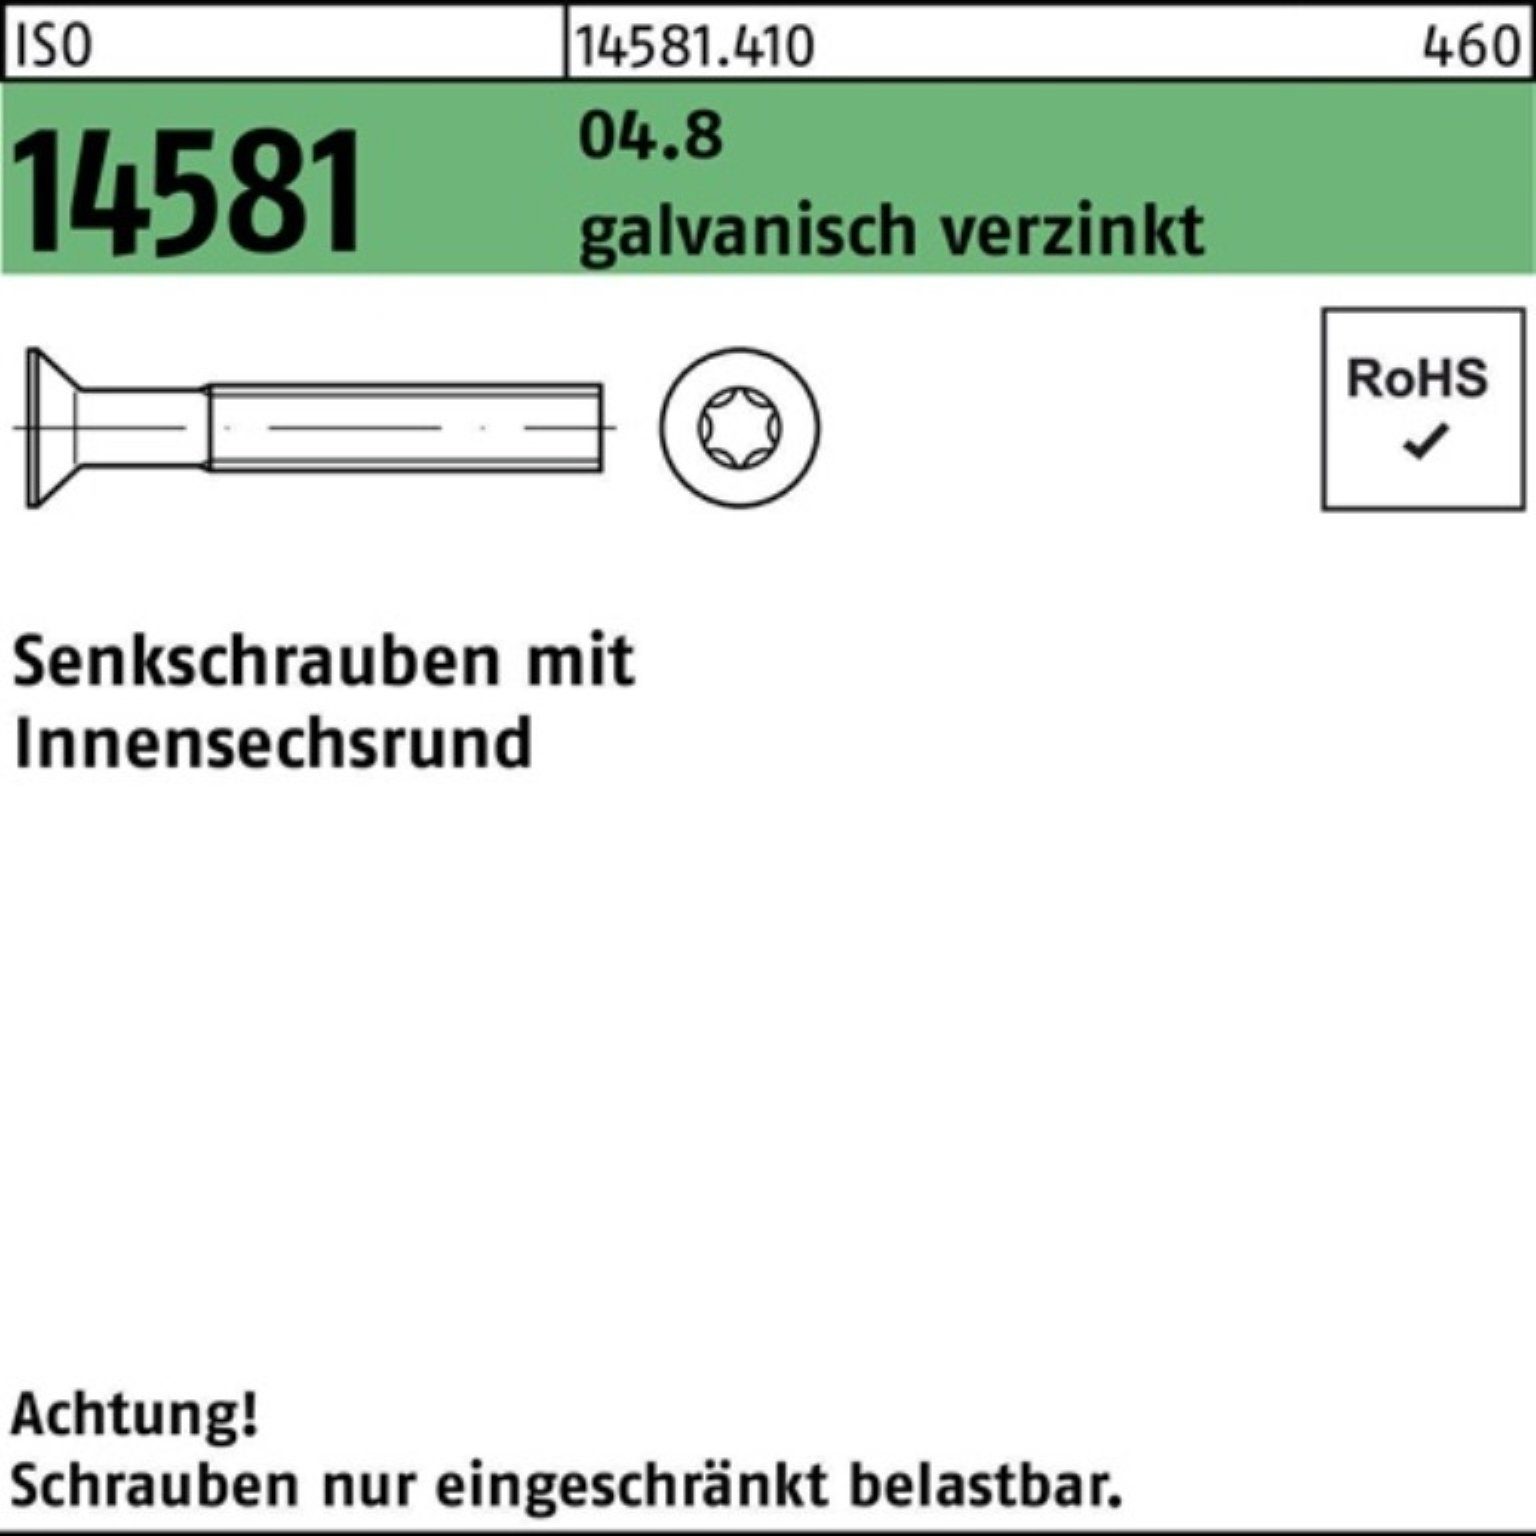 Reyher Senkschraube 500er Pack Senkschraube ISO 14581 ISR M5x45 T25 04.8 galv.verz. 500St.